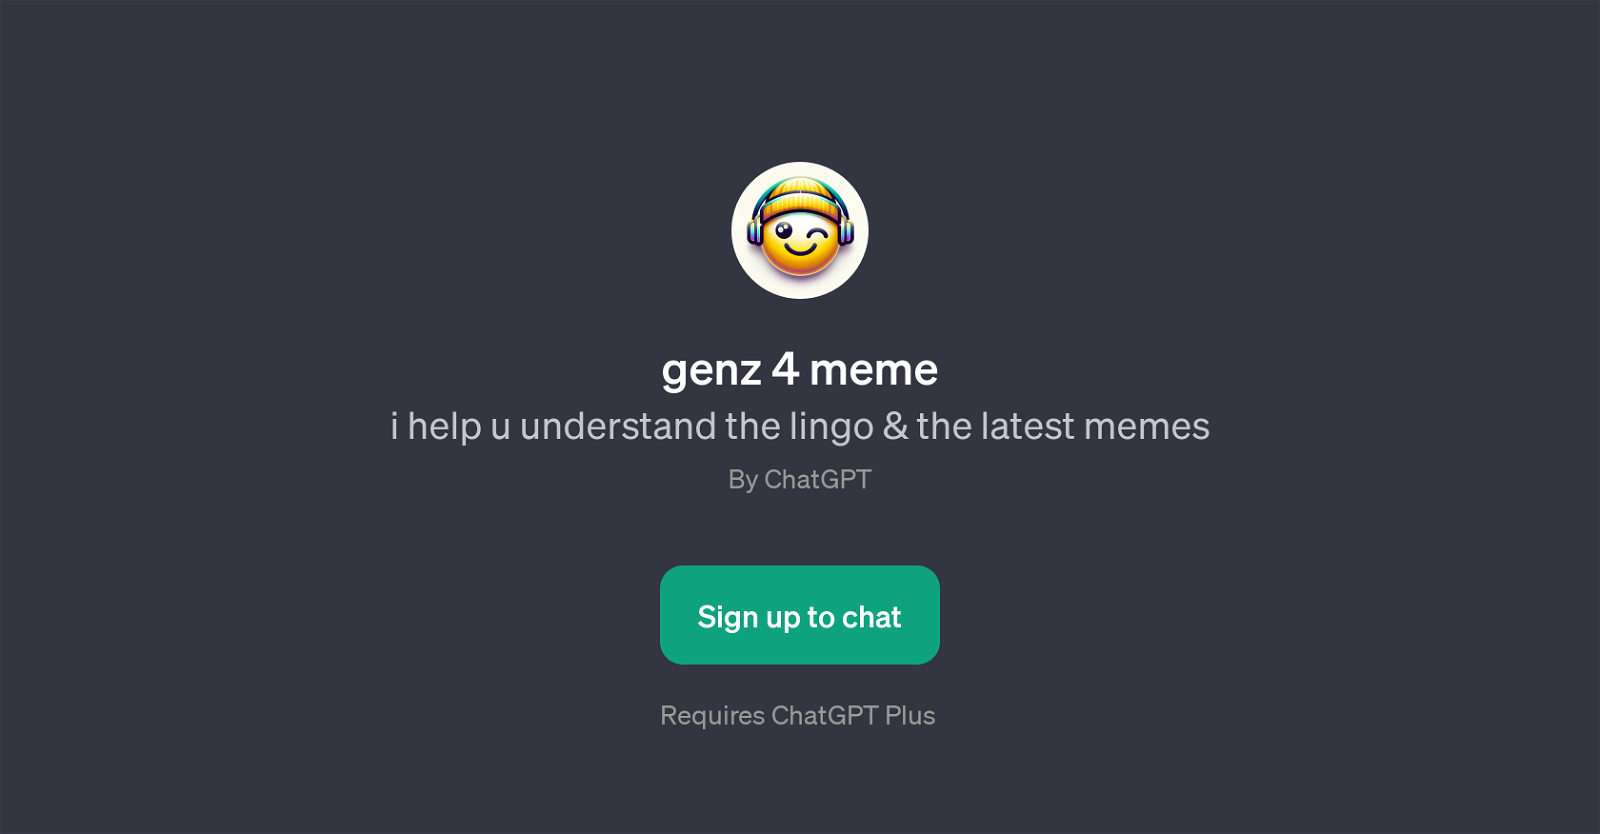 genz 4 meme website